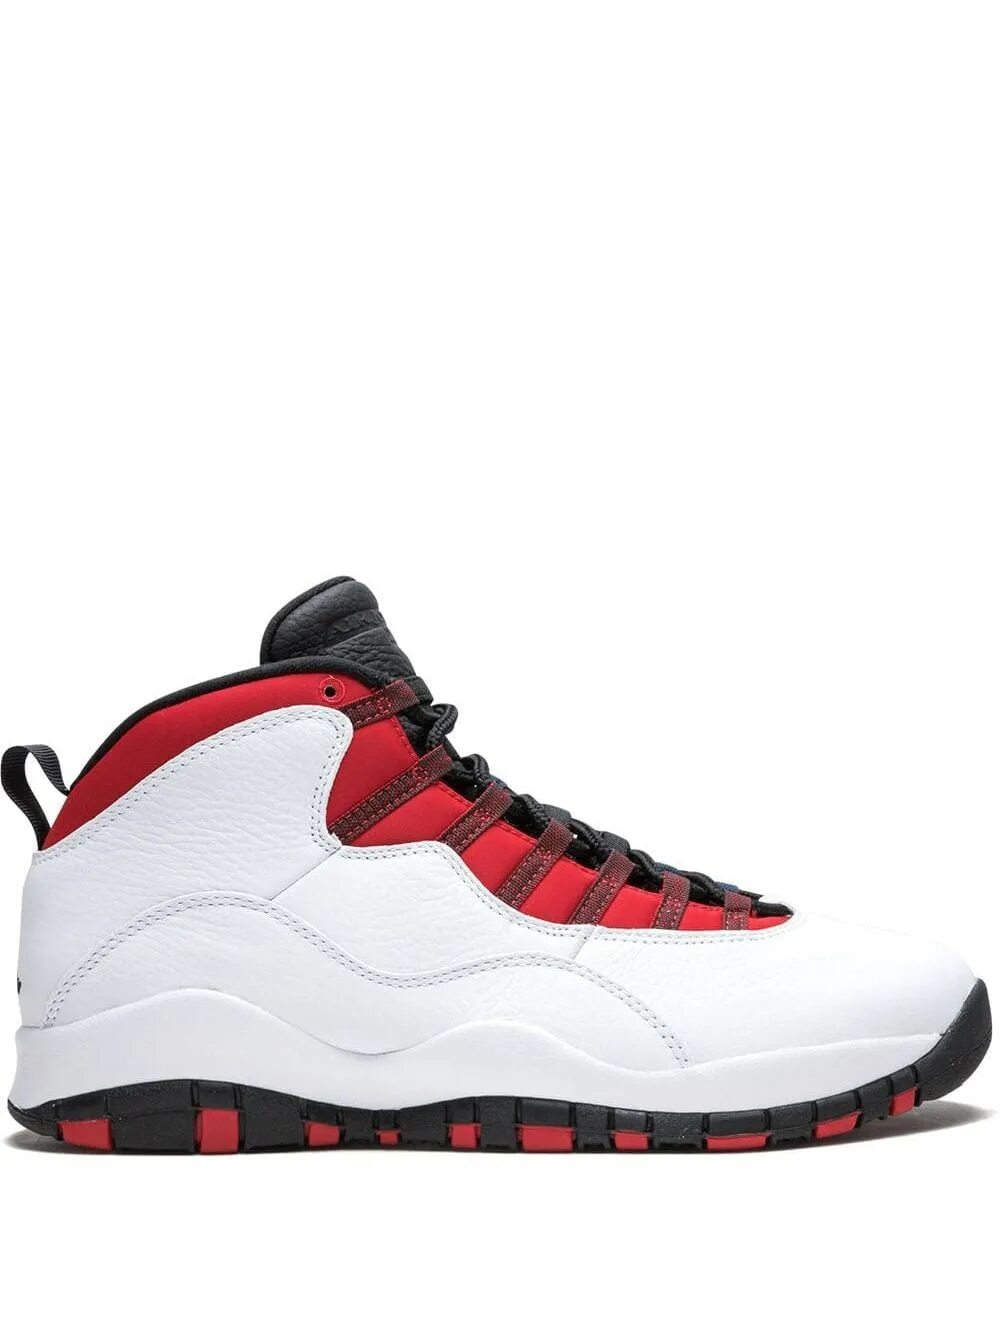 Кроссовки Air Jordan 10. Nike Air Jordan 10. Кроссовки Air Jordan 10 Retro. Nike Jordan Retro 10.